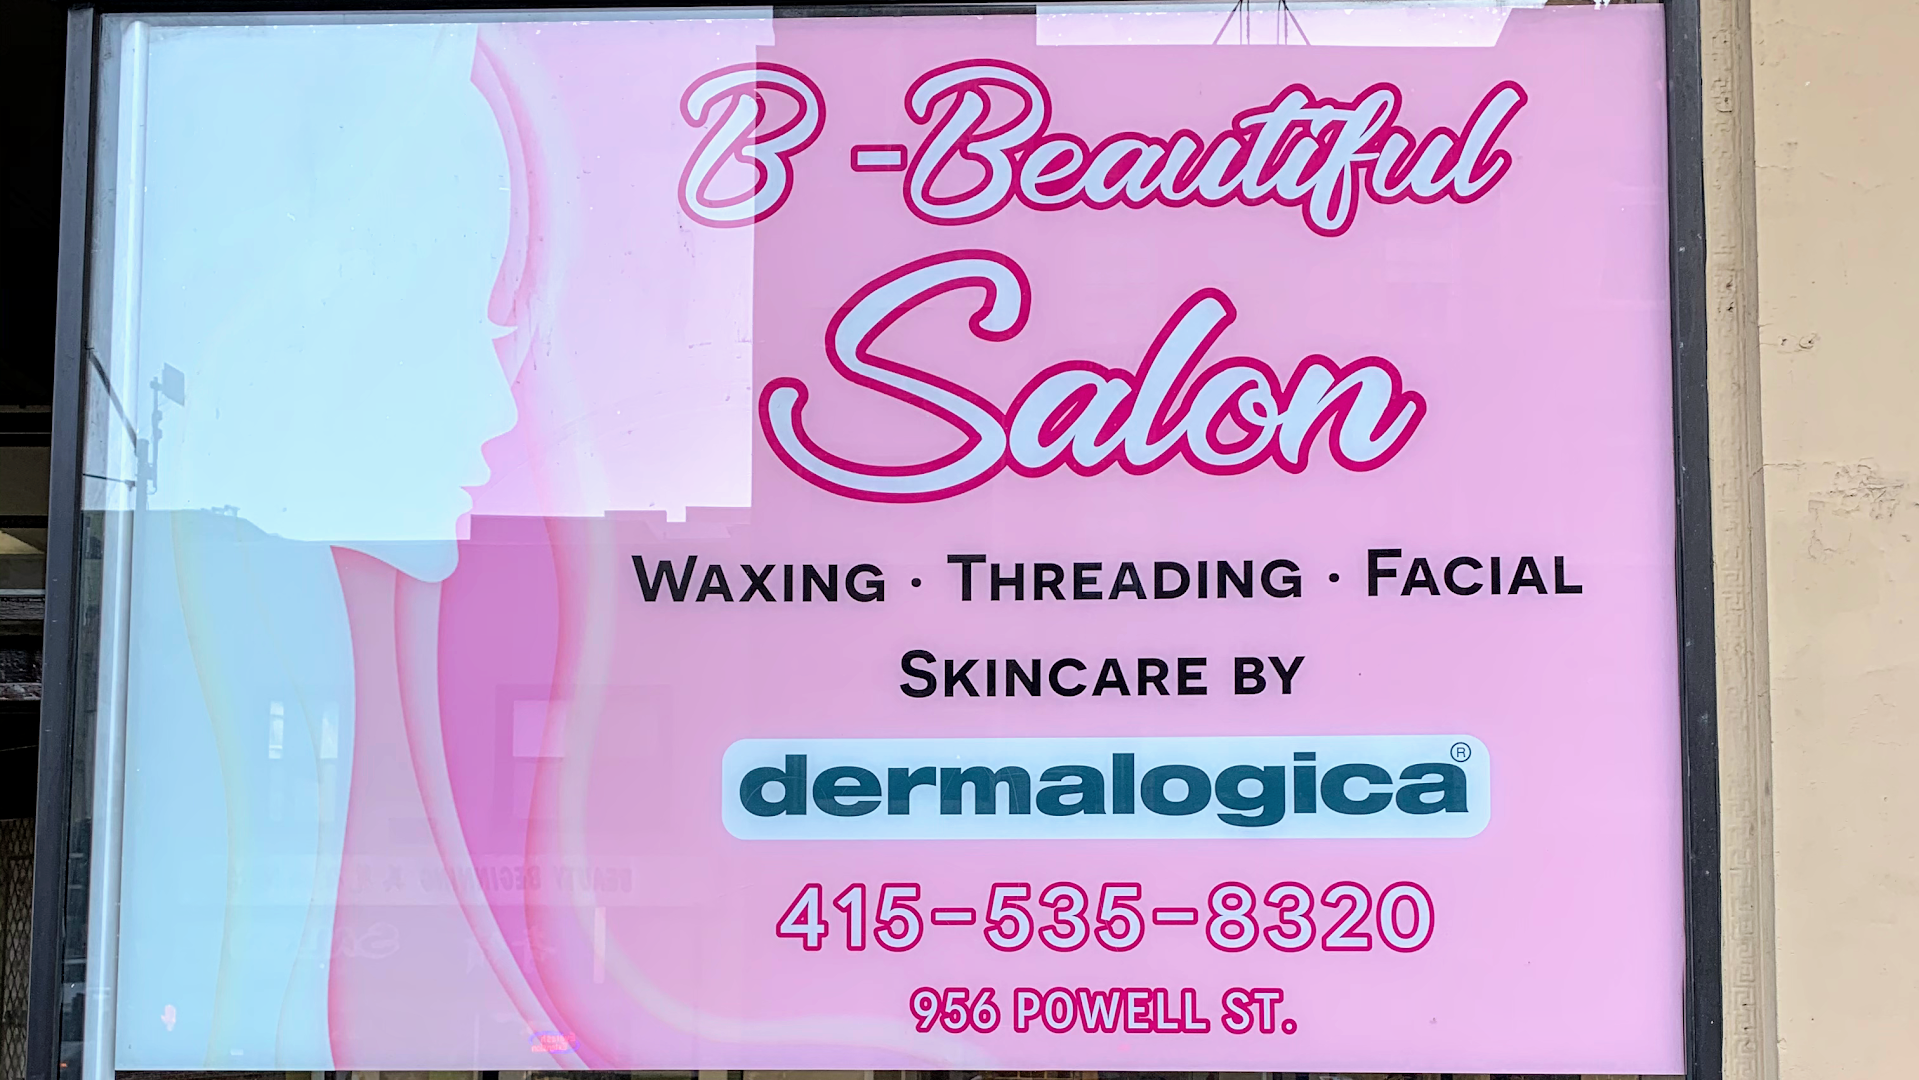 B-beautiful salon